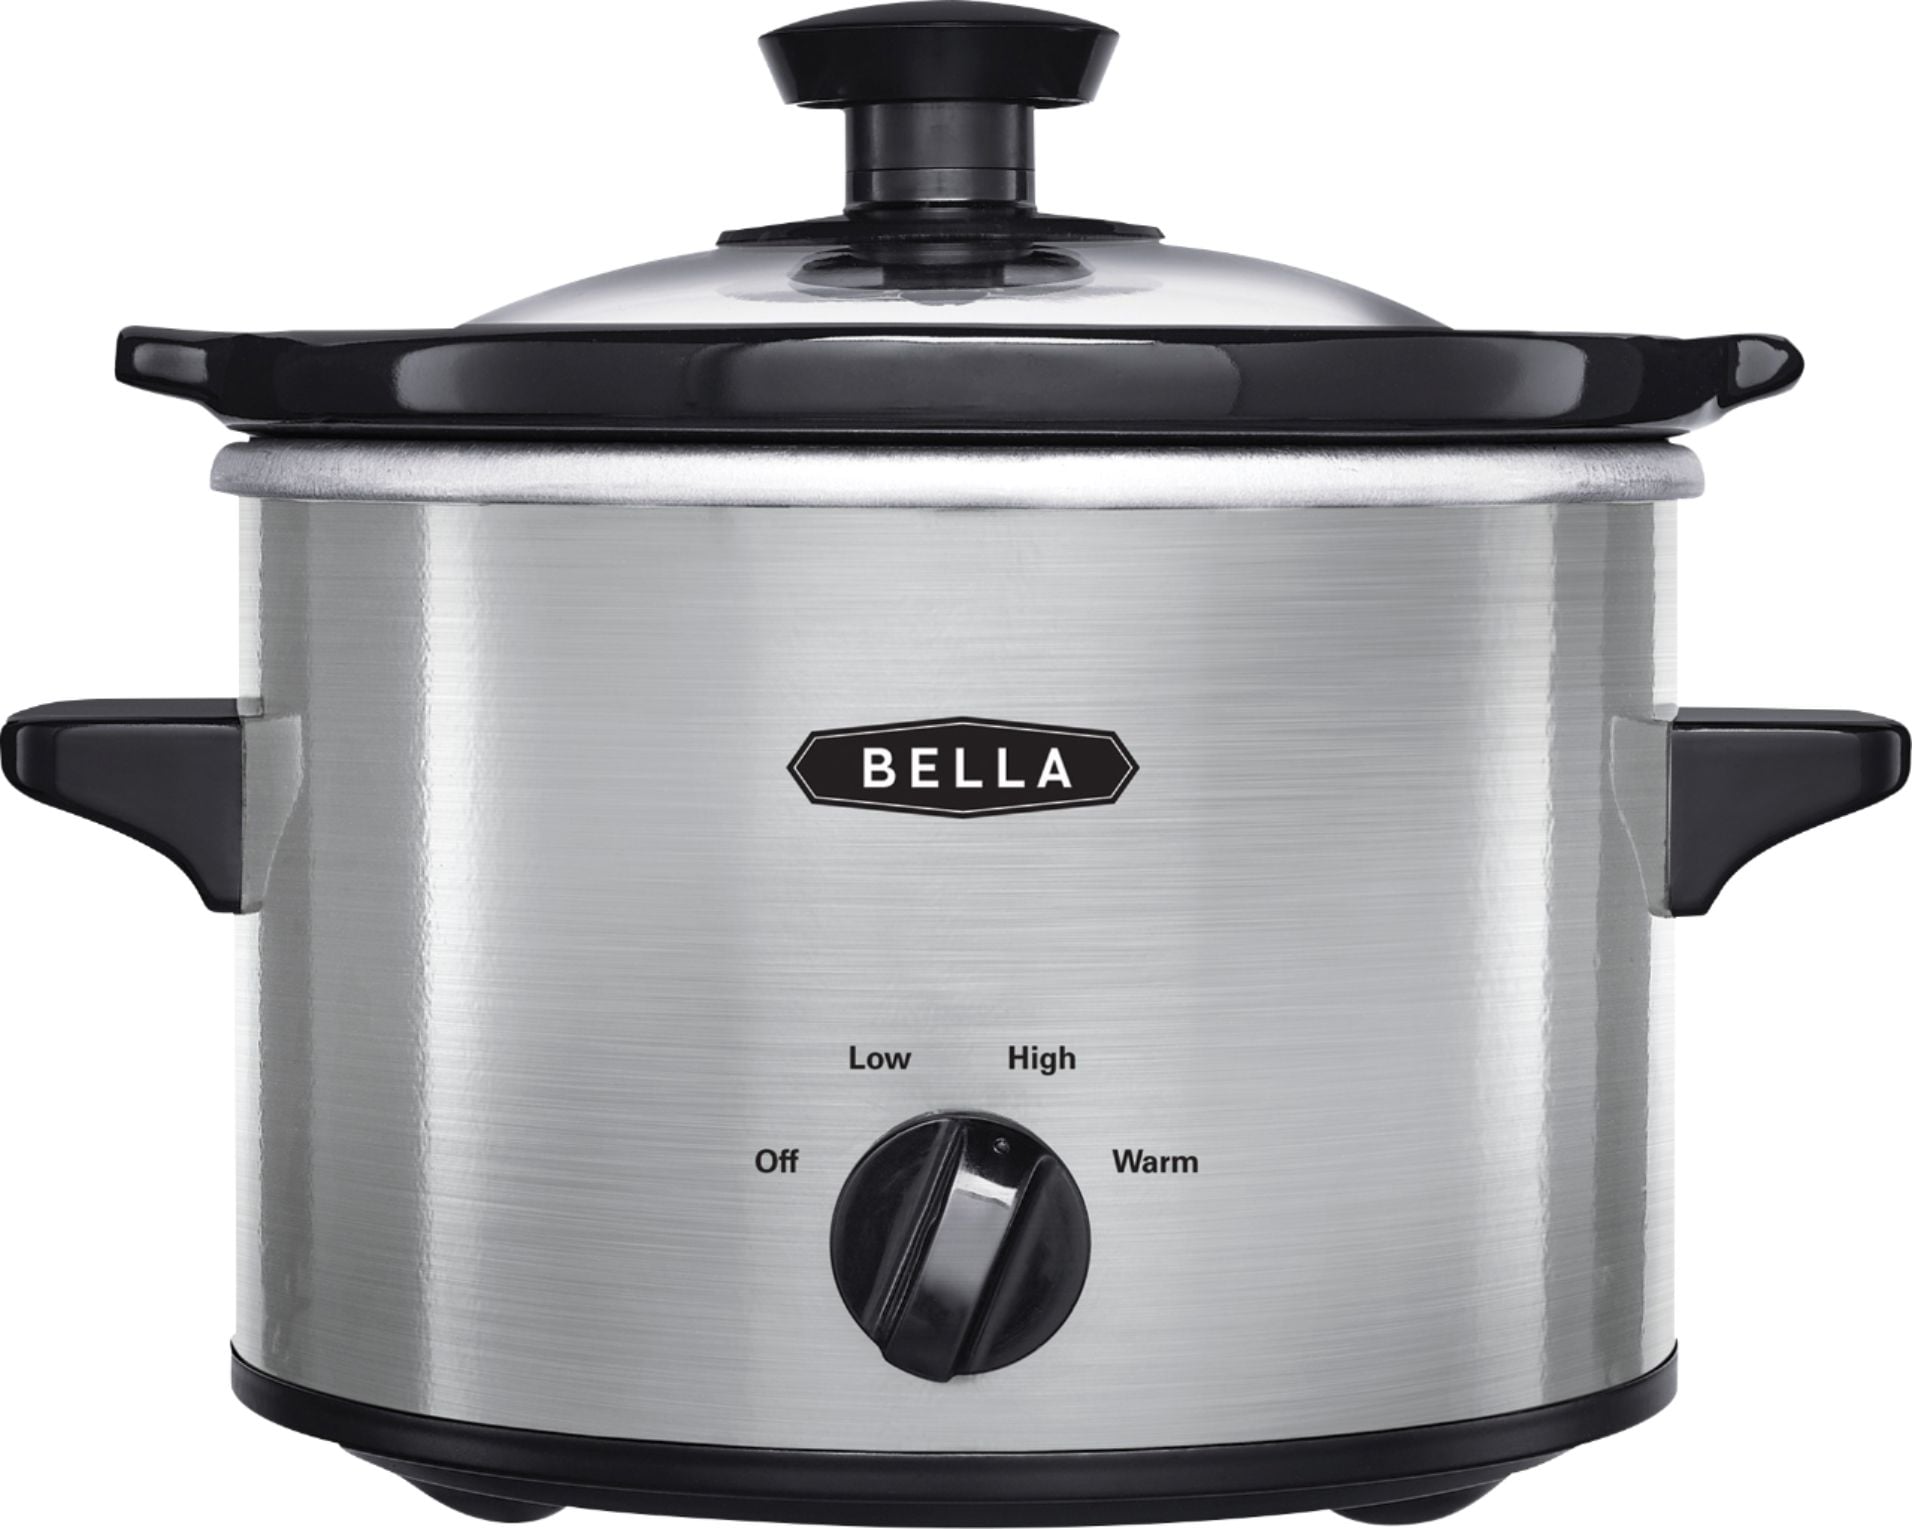 Bella 1.5-Quart Slow Cooker (Stainless Steel) @BestBuy $6